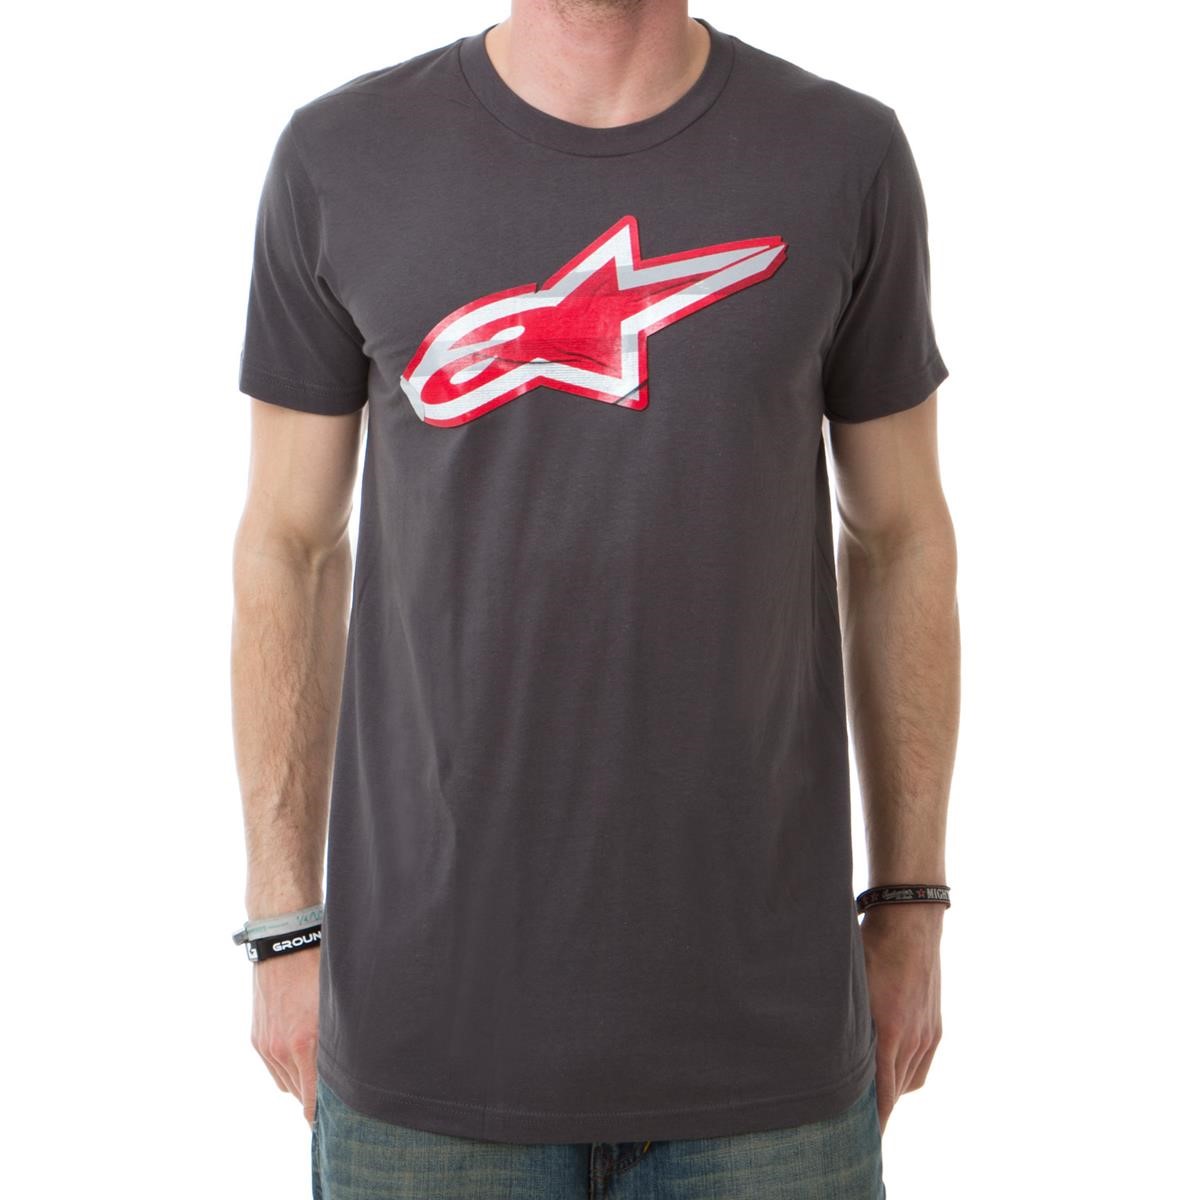 Freizeit/Streetwear Bekleidung-T-Shirts/Polos - Alpinestars T-Shirt Sticky Charcoal